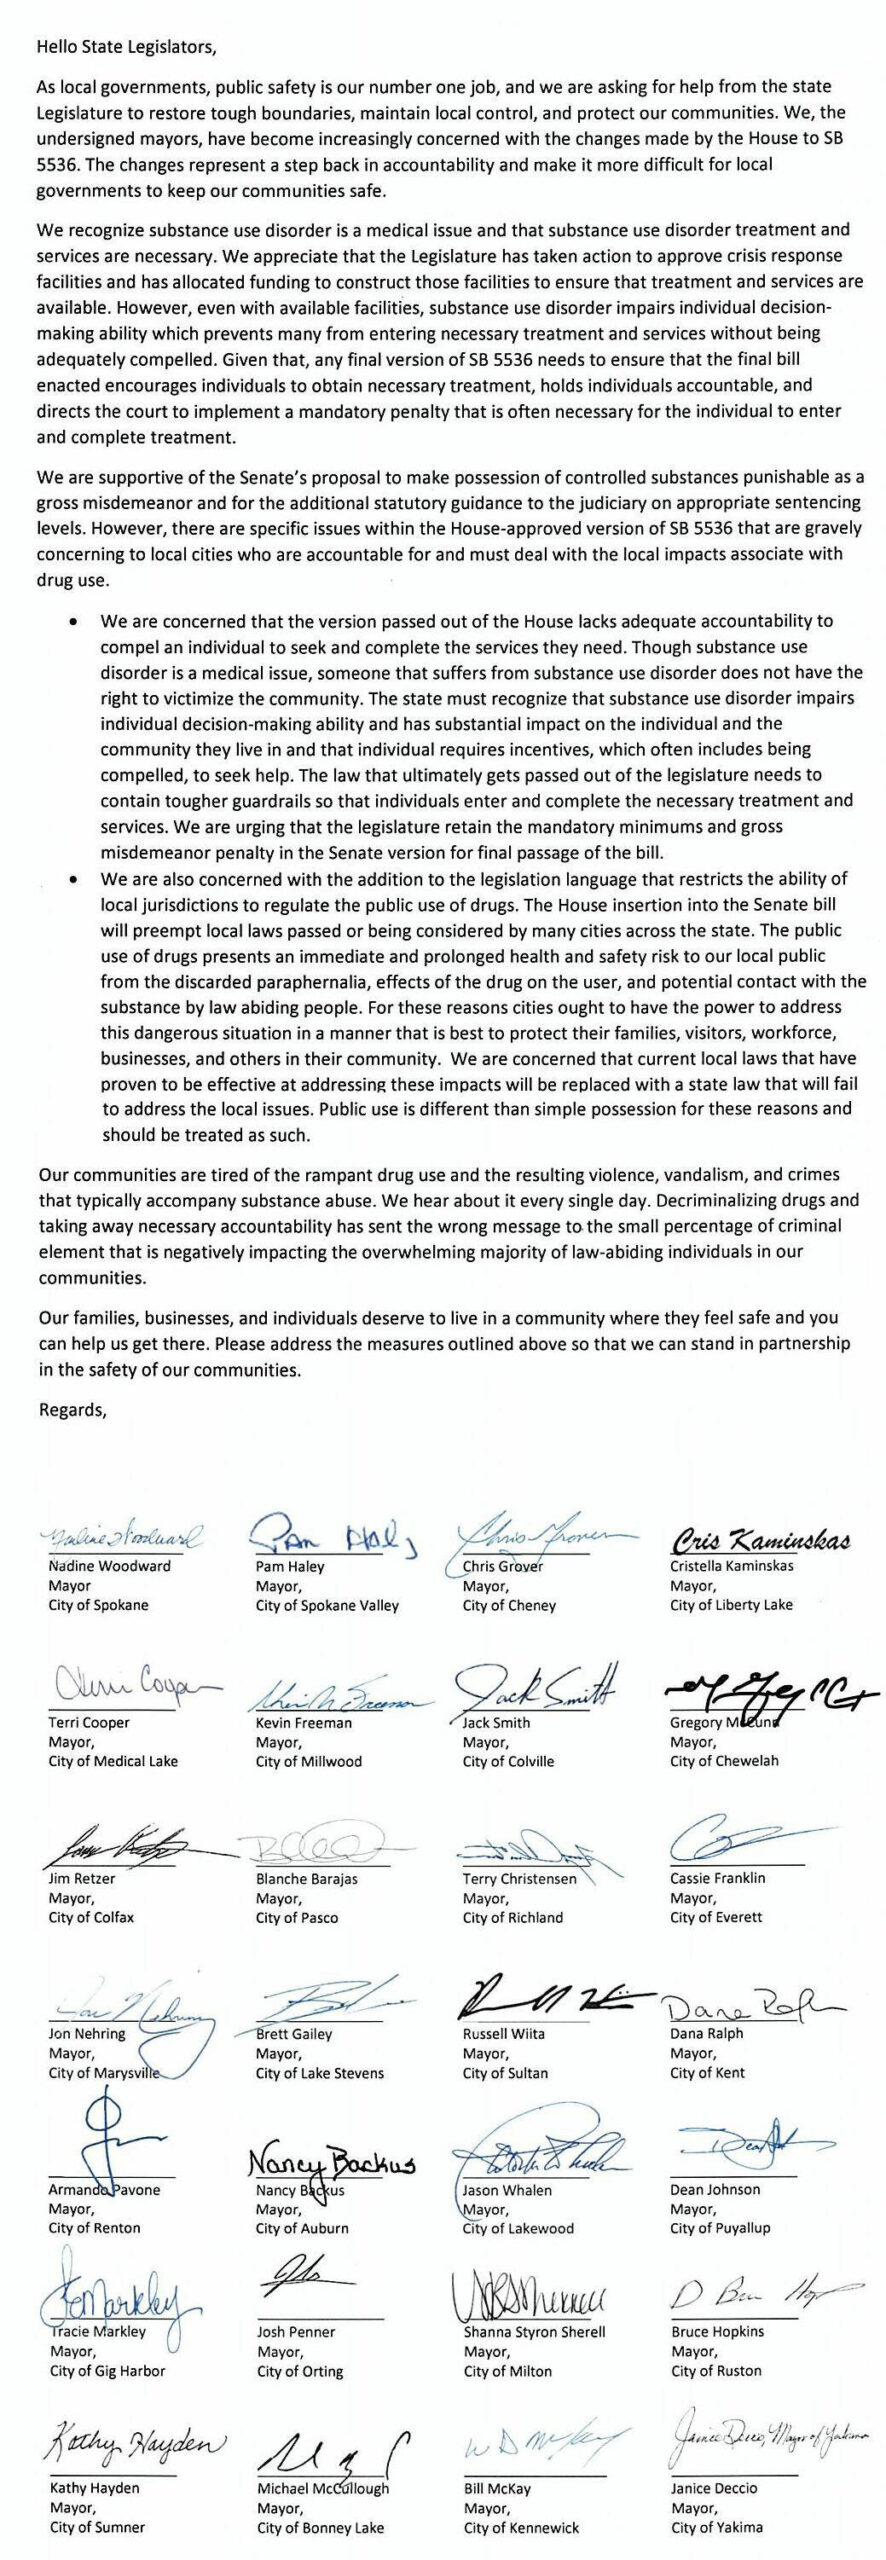 Letter sent to legislators from 28 mayors across the state.